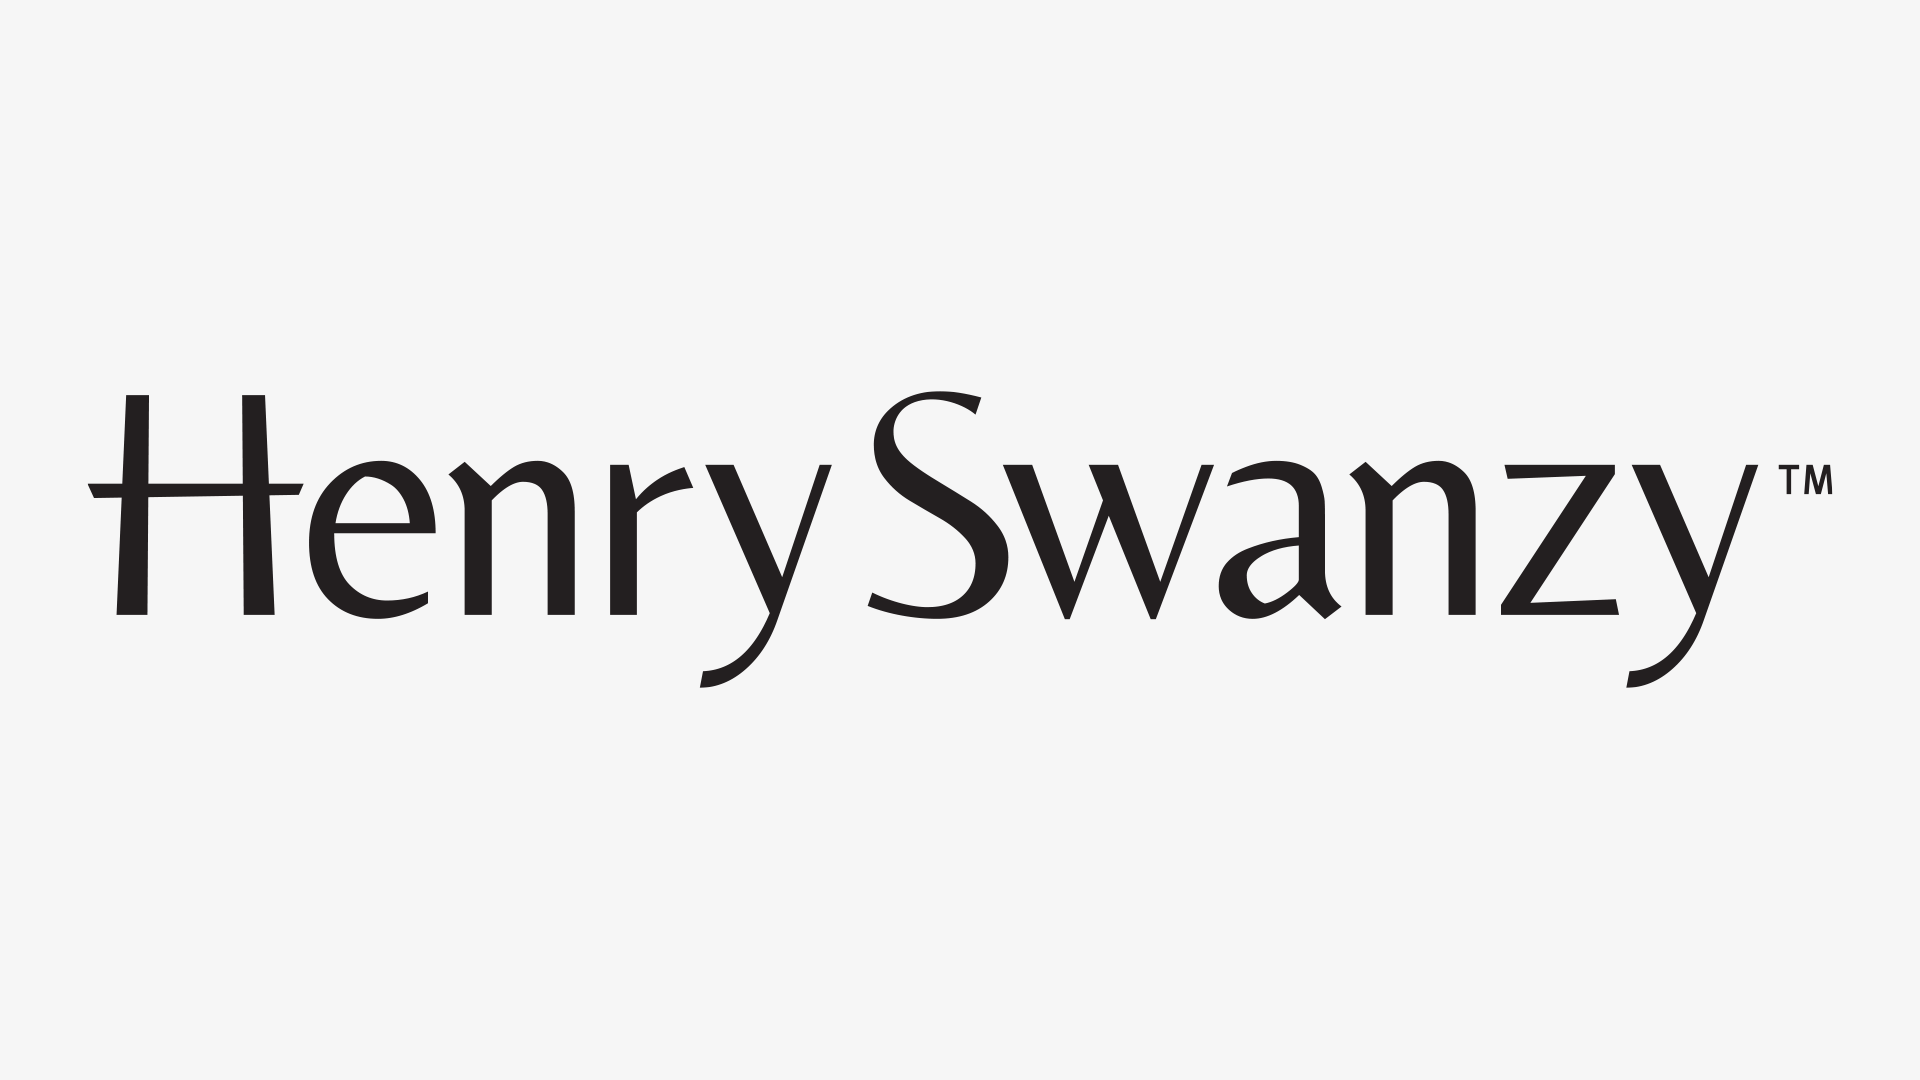 Henry Swanzy